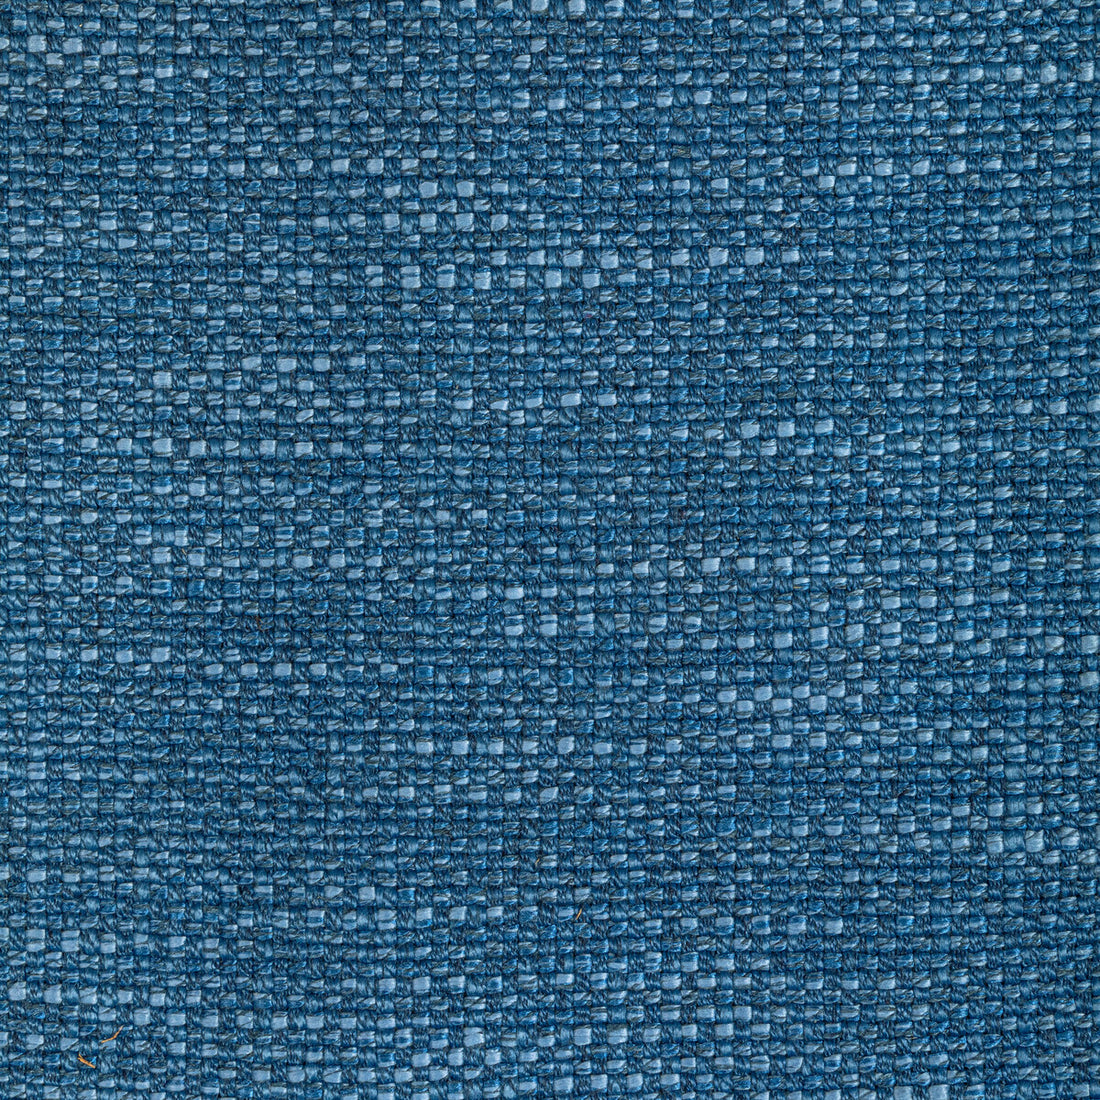 Kravet Design fabric in 36594-505 color - pattern 36594.505.0 - by Kravet Design in the Performance Kravetarmor collection